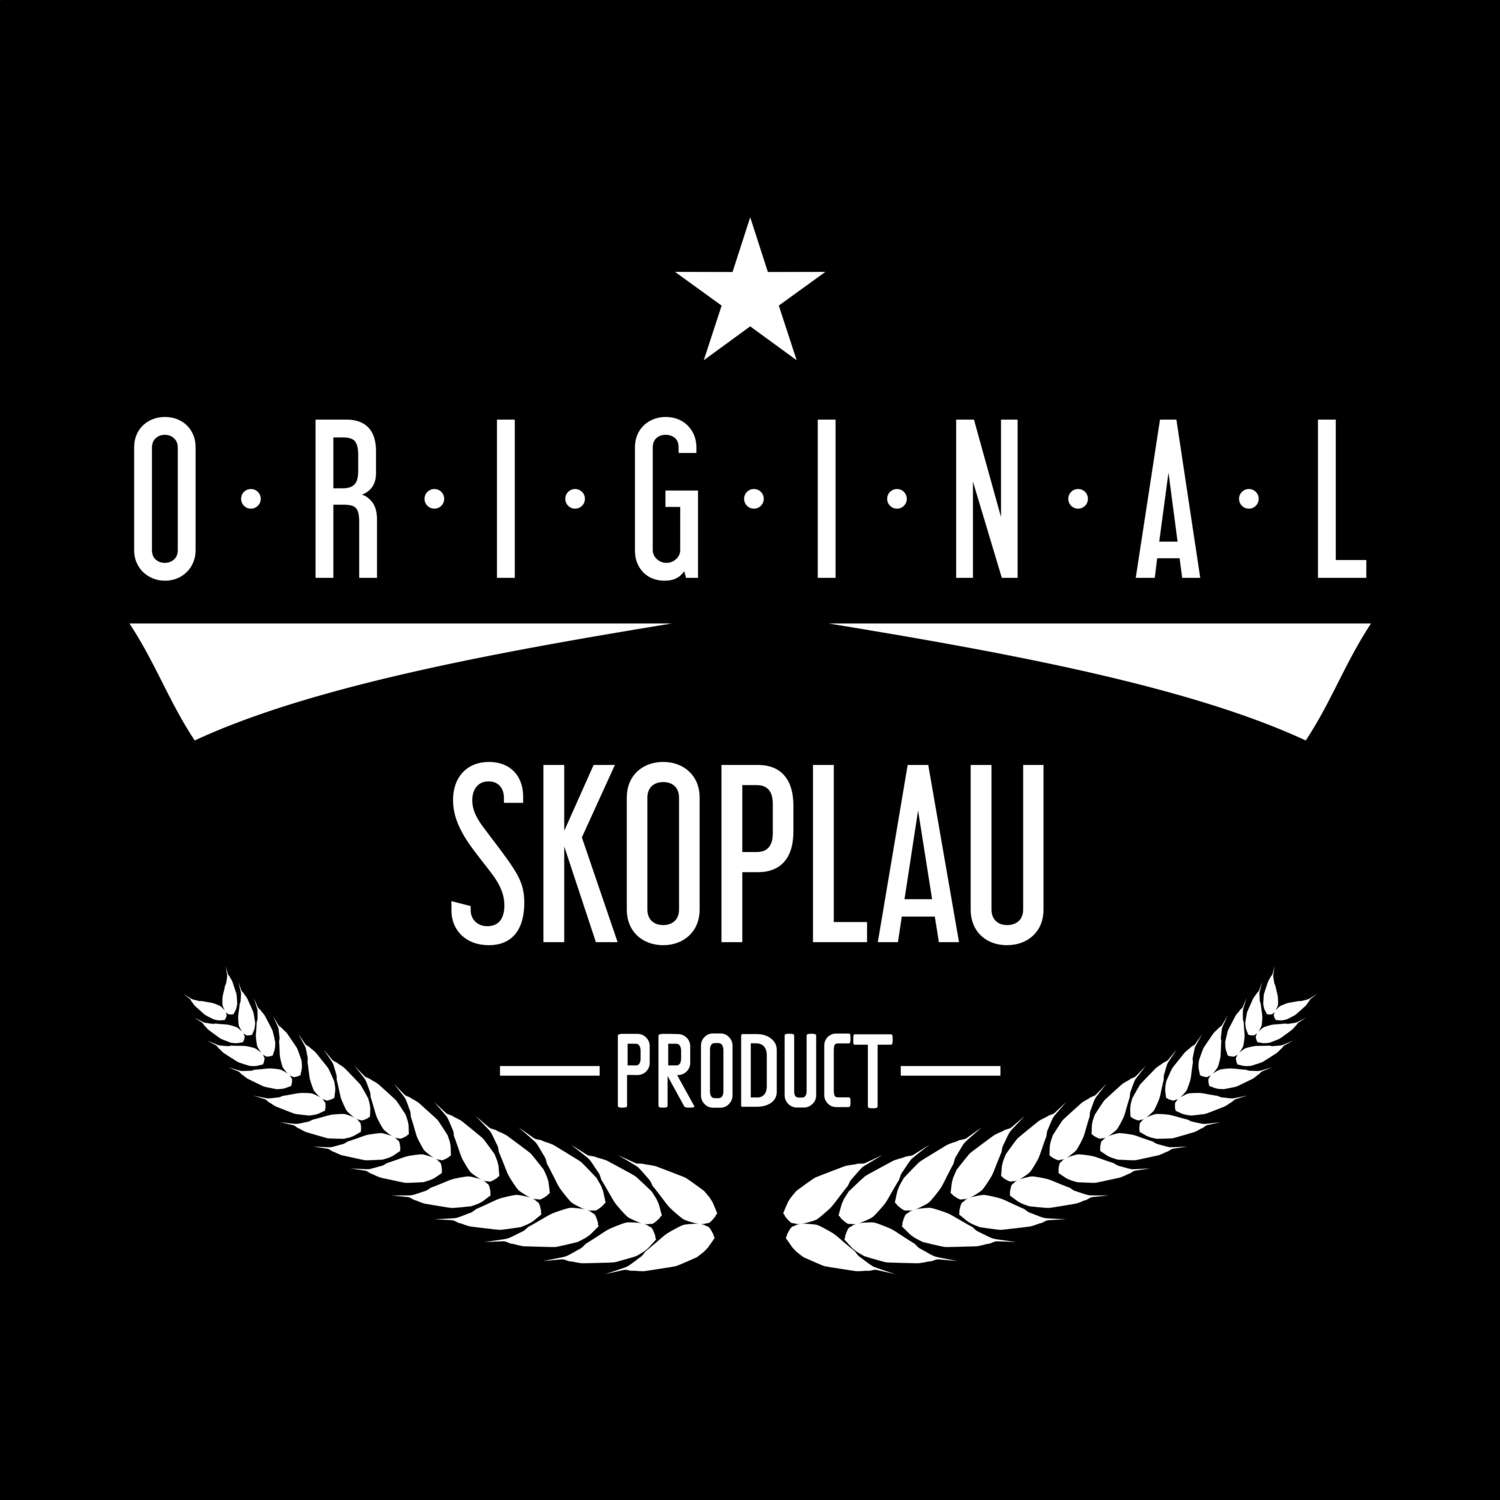 Skoplau T-Shirt »Original Product«